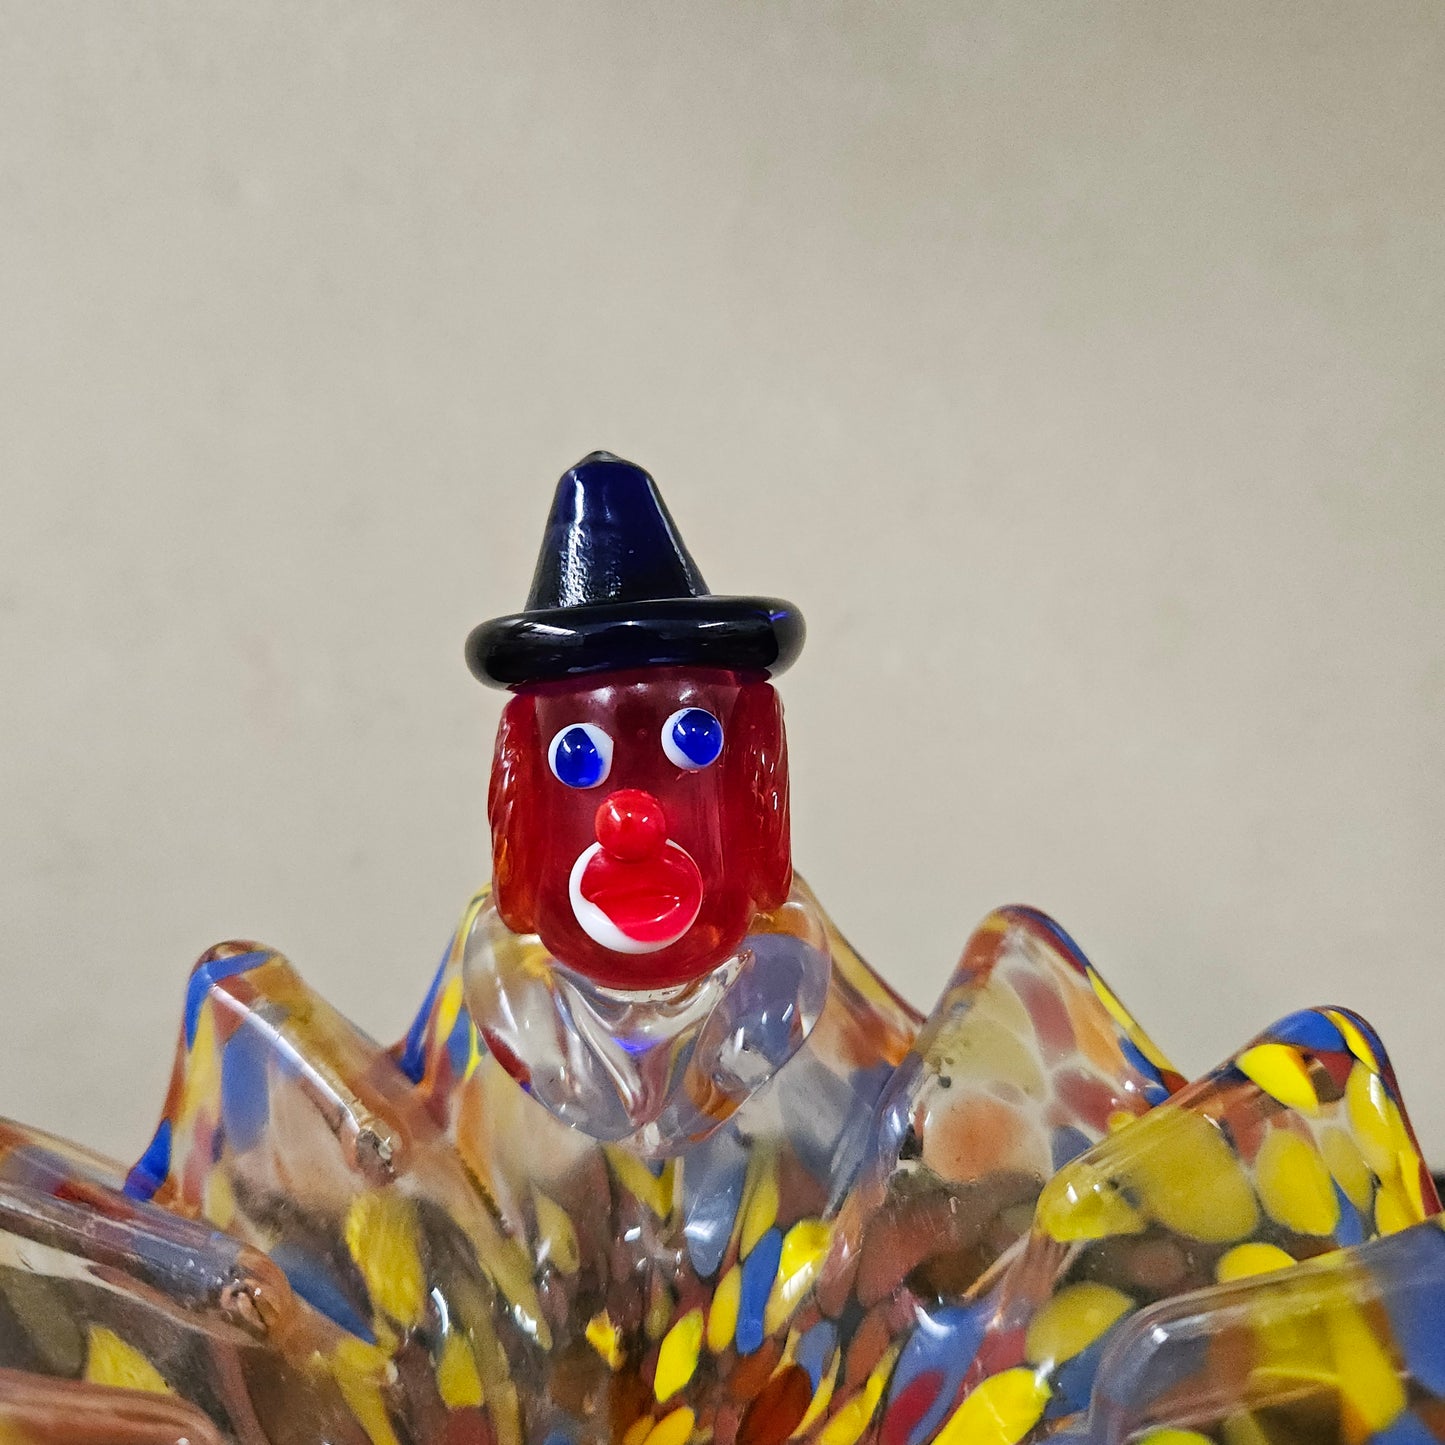 Murano Glass Clown Trinket Bowl